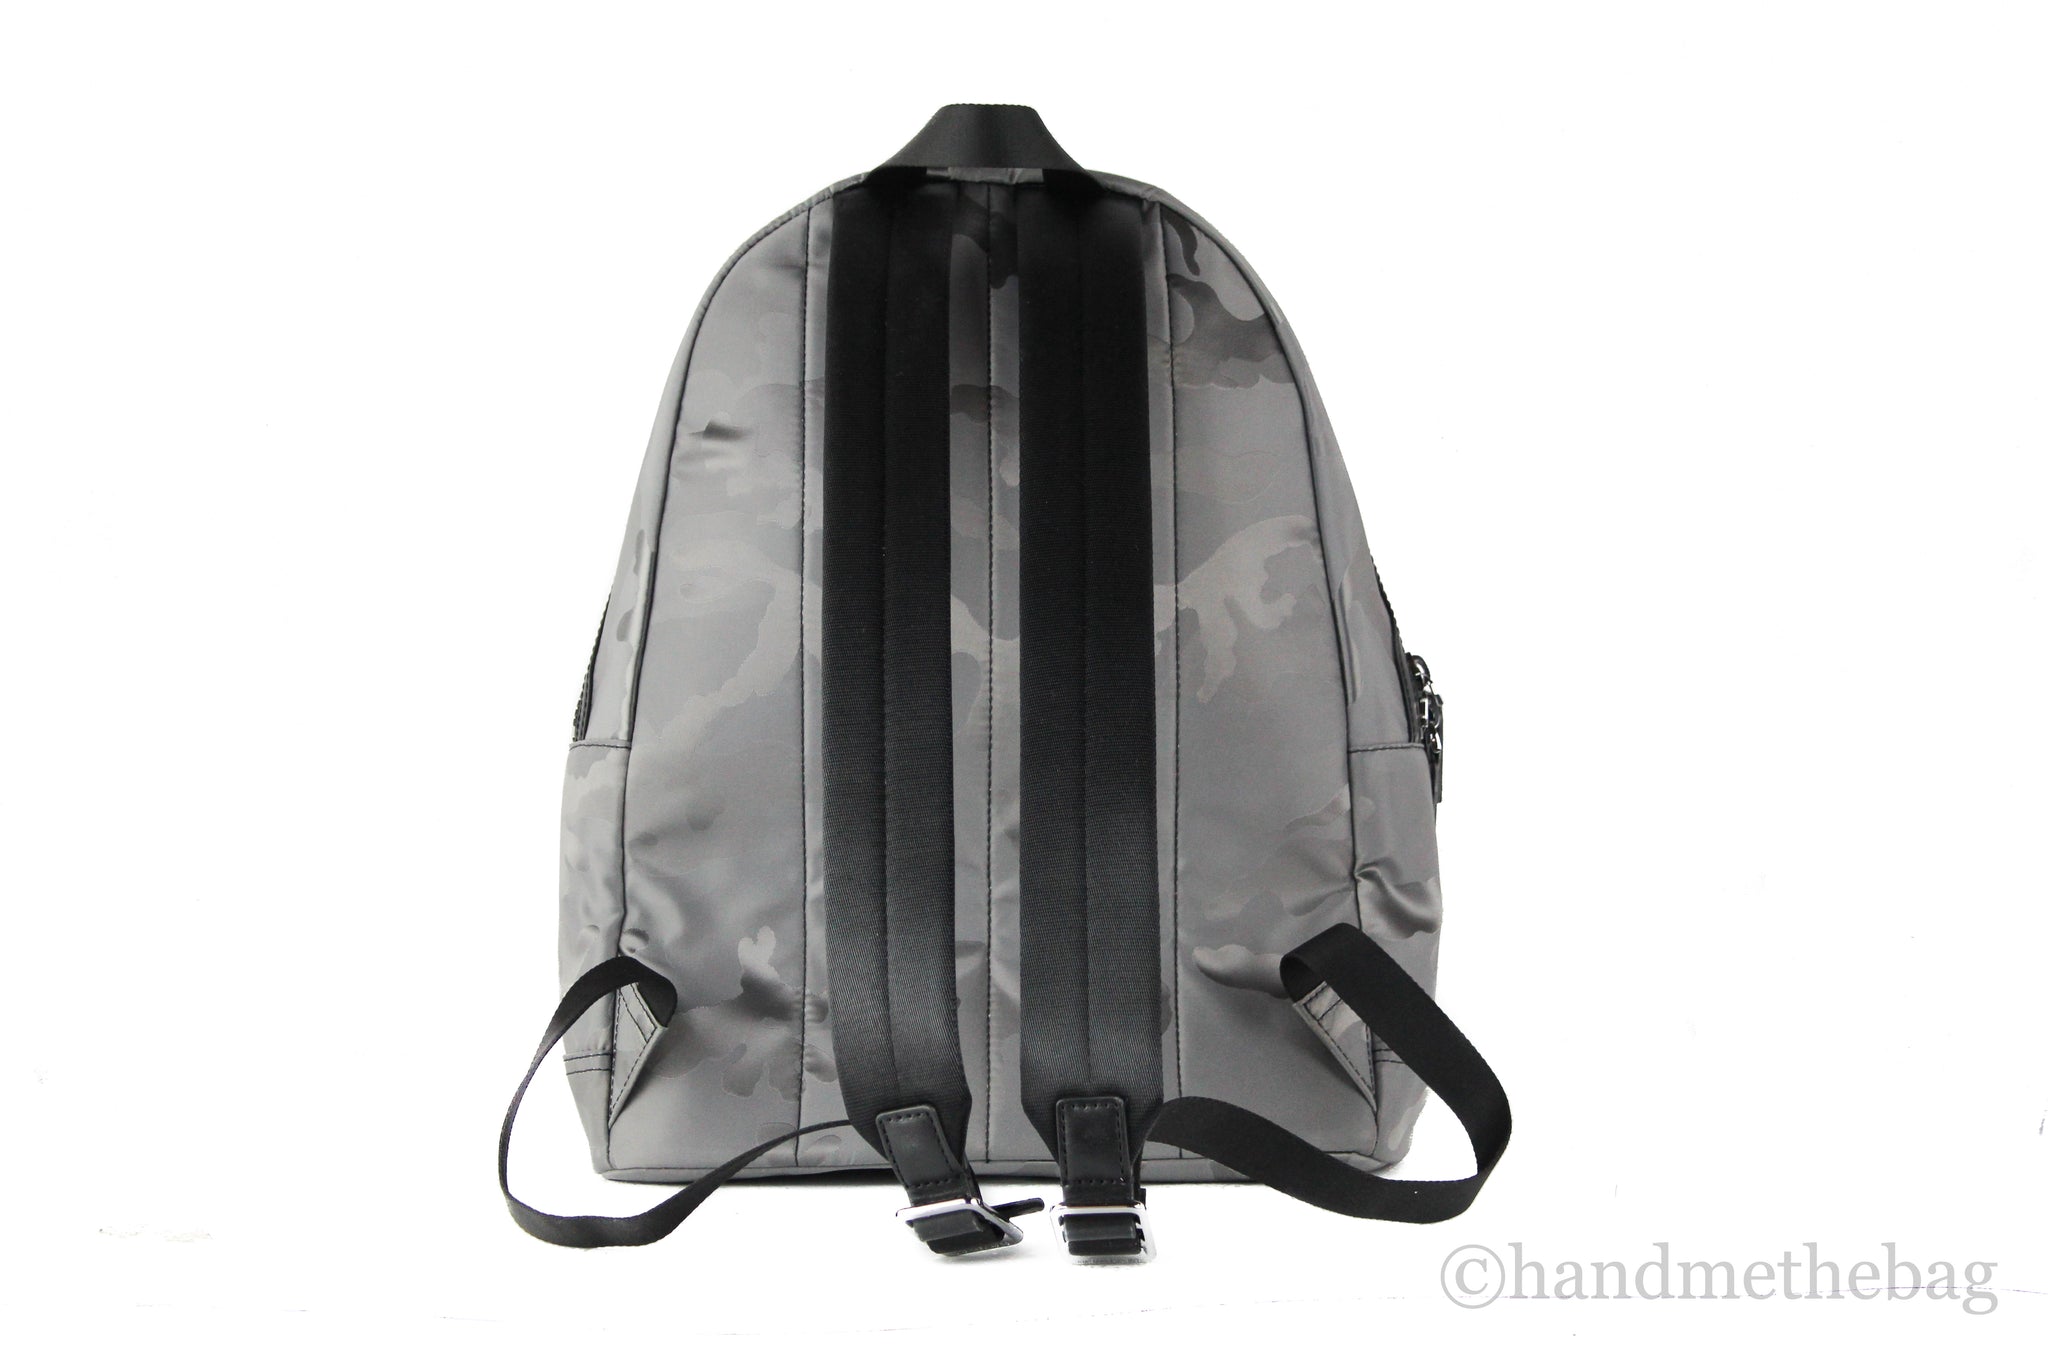 Michael Kors Kent Mens Nylon Grey Camo Print Orange Neon Shoulder Backpack Bag